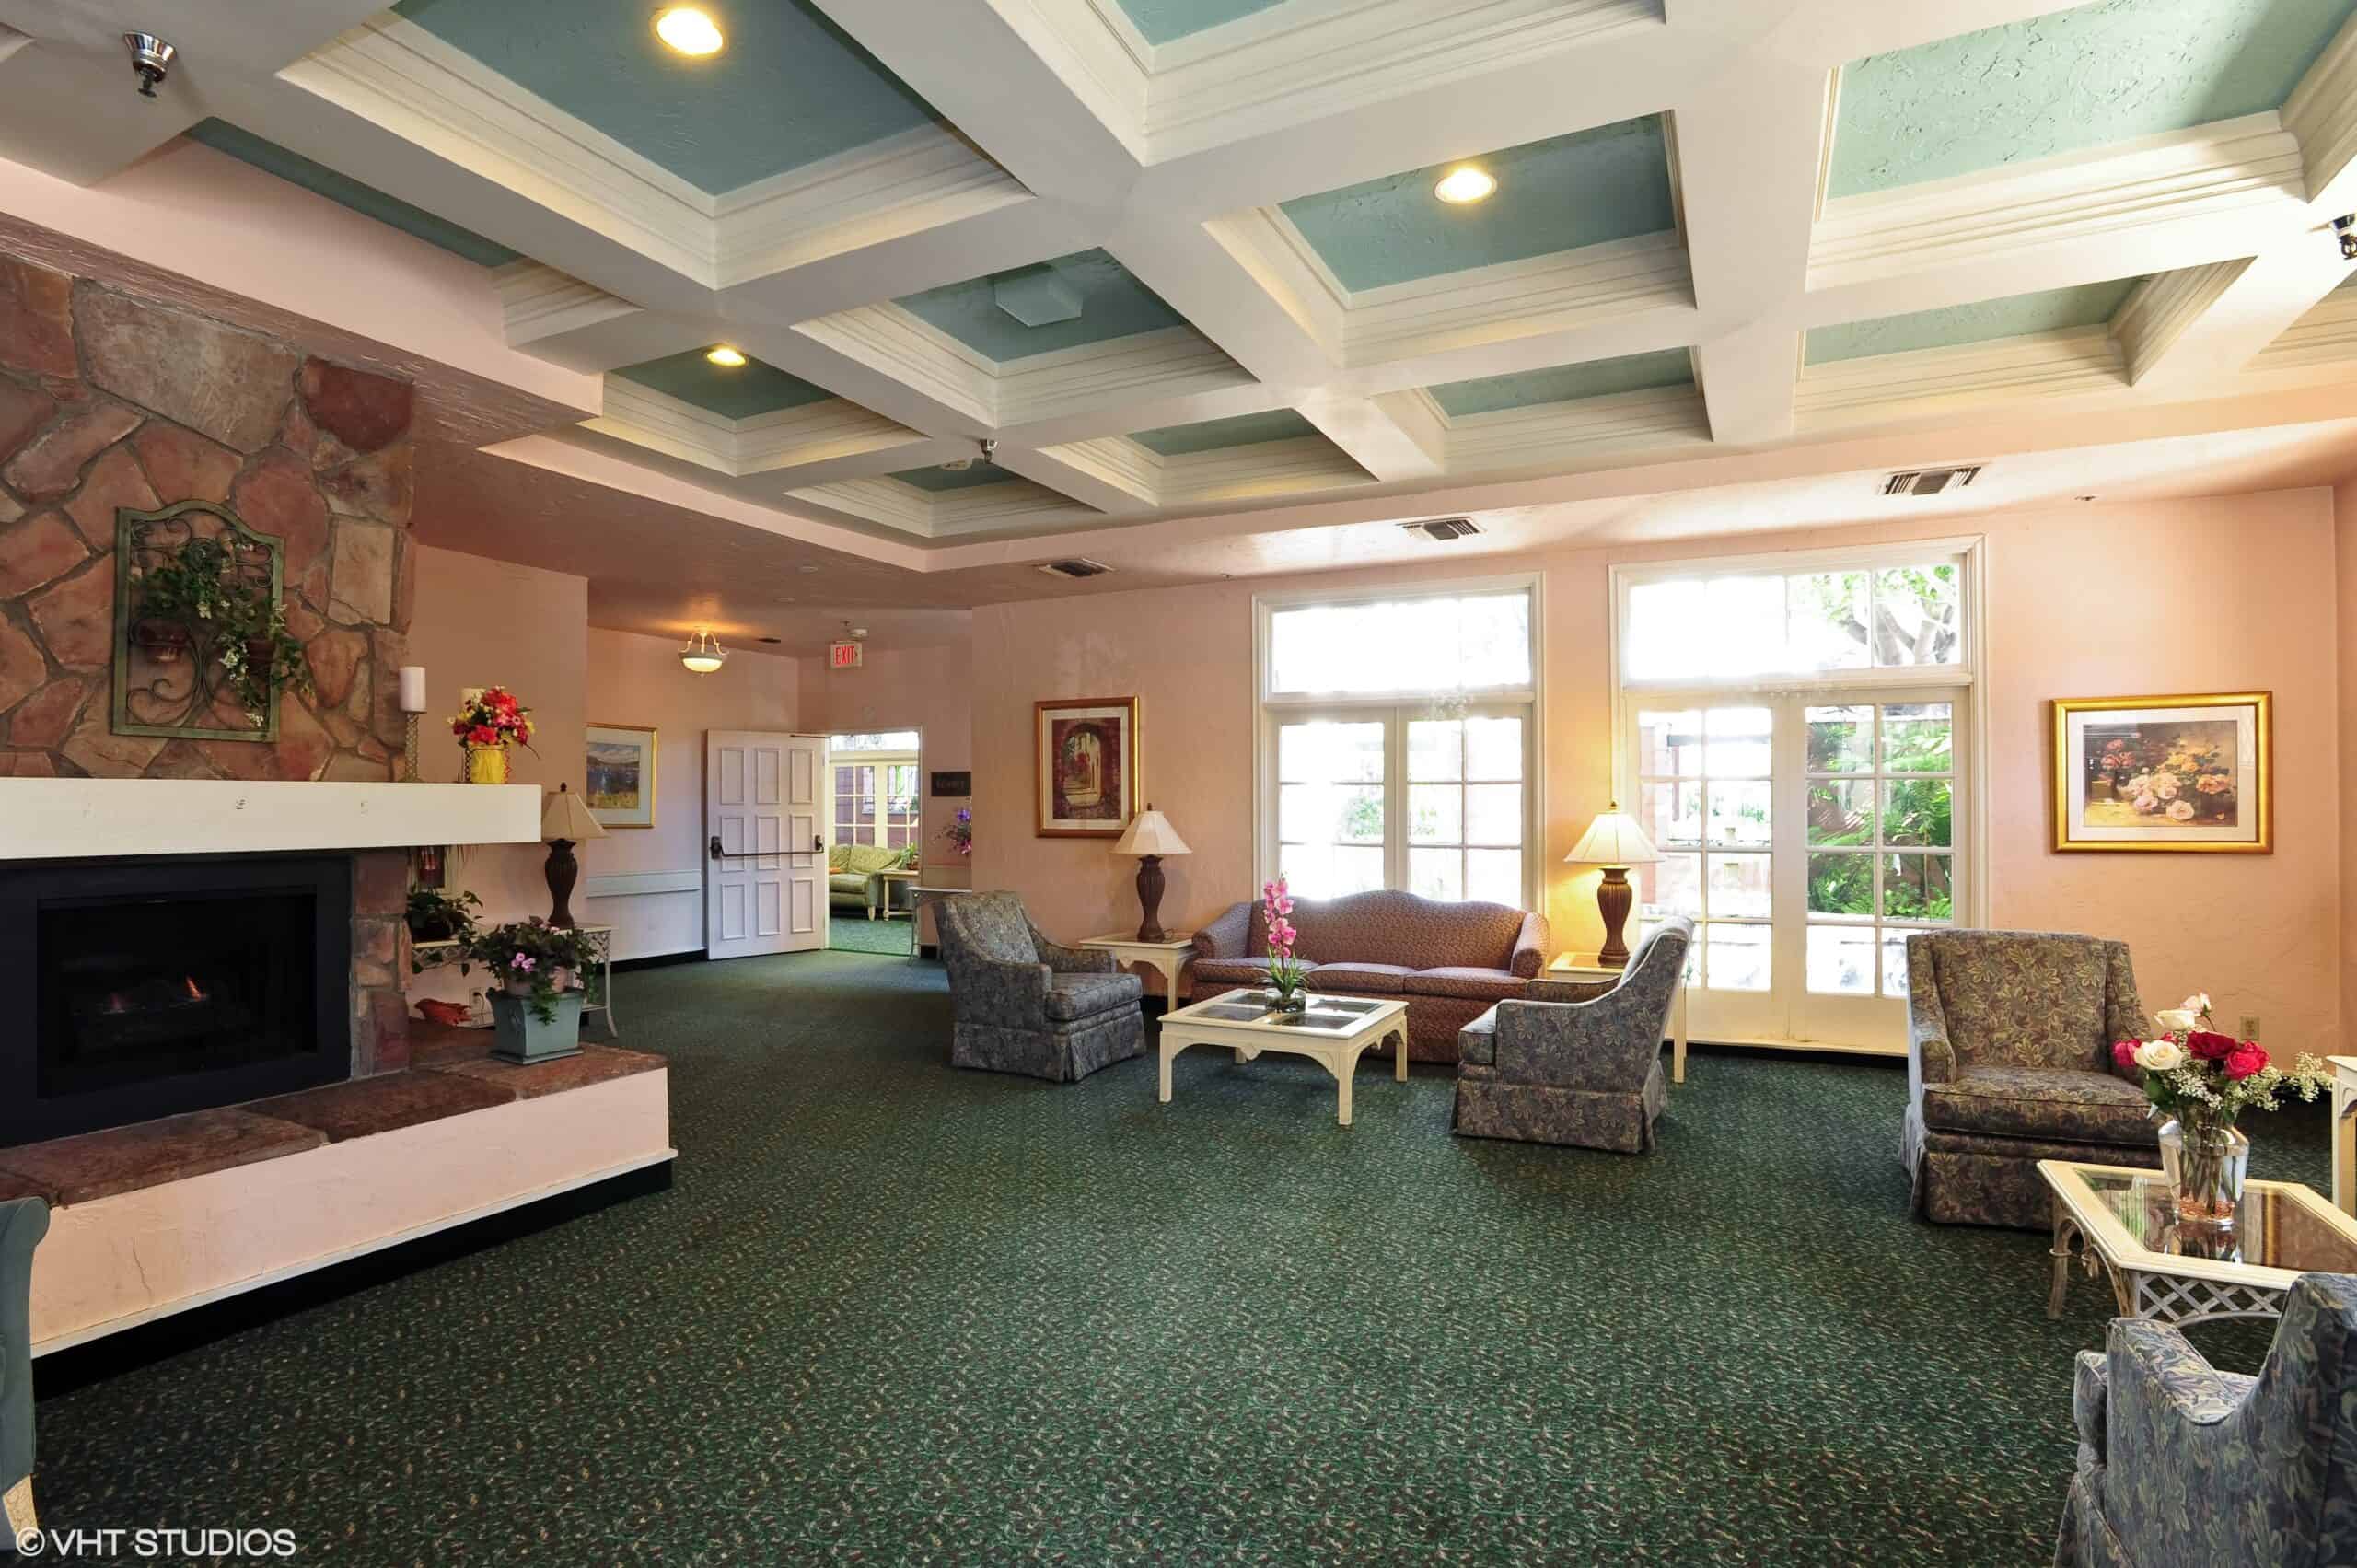 Lobby area with a fireplace at the Villa Santa Barbara, a senior living community in Santa Barbara, California.